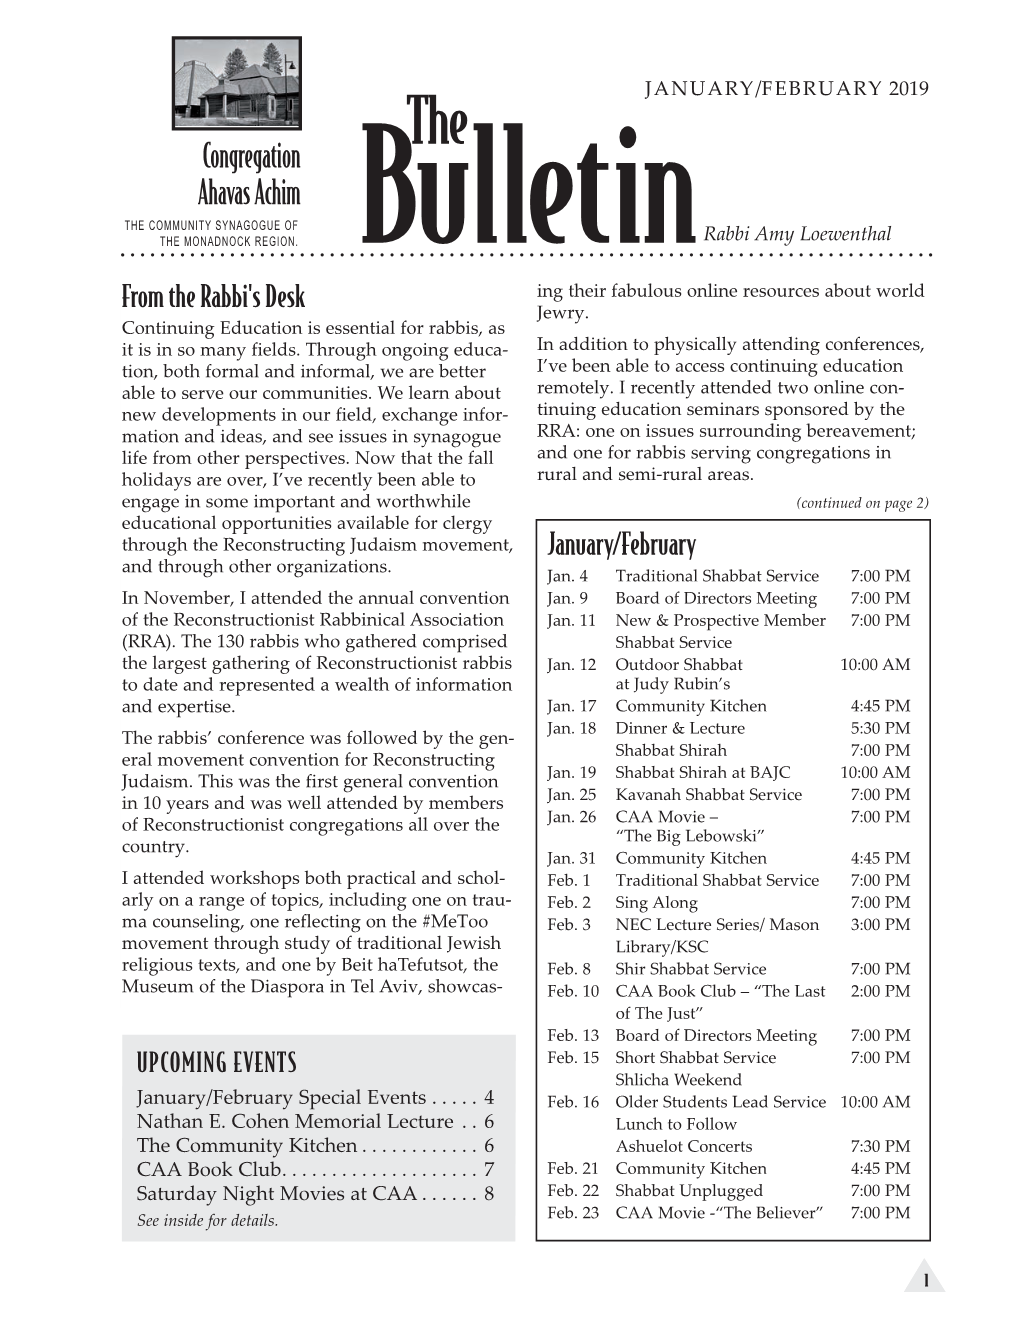 February 2019 Bulletin